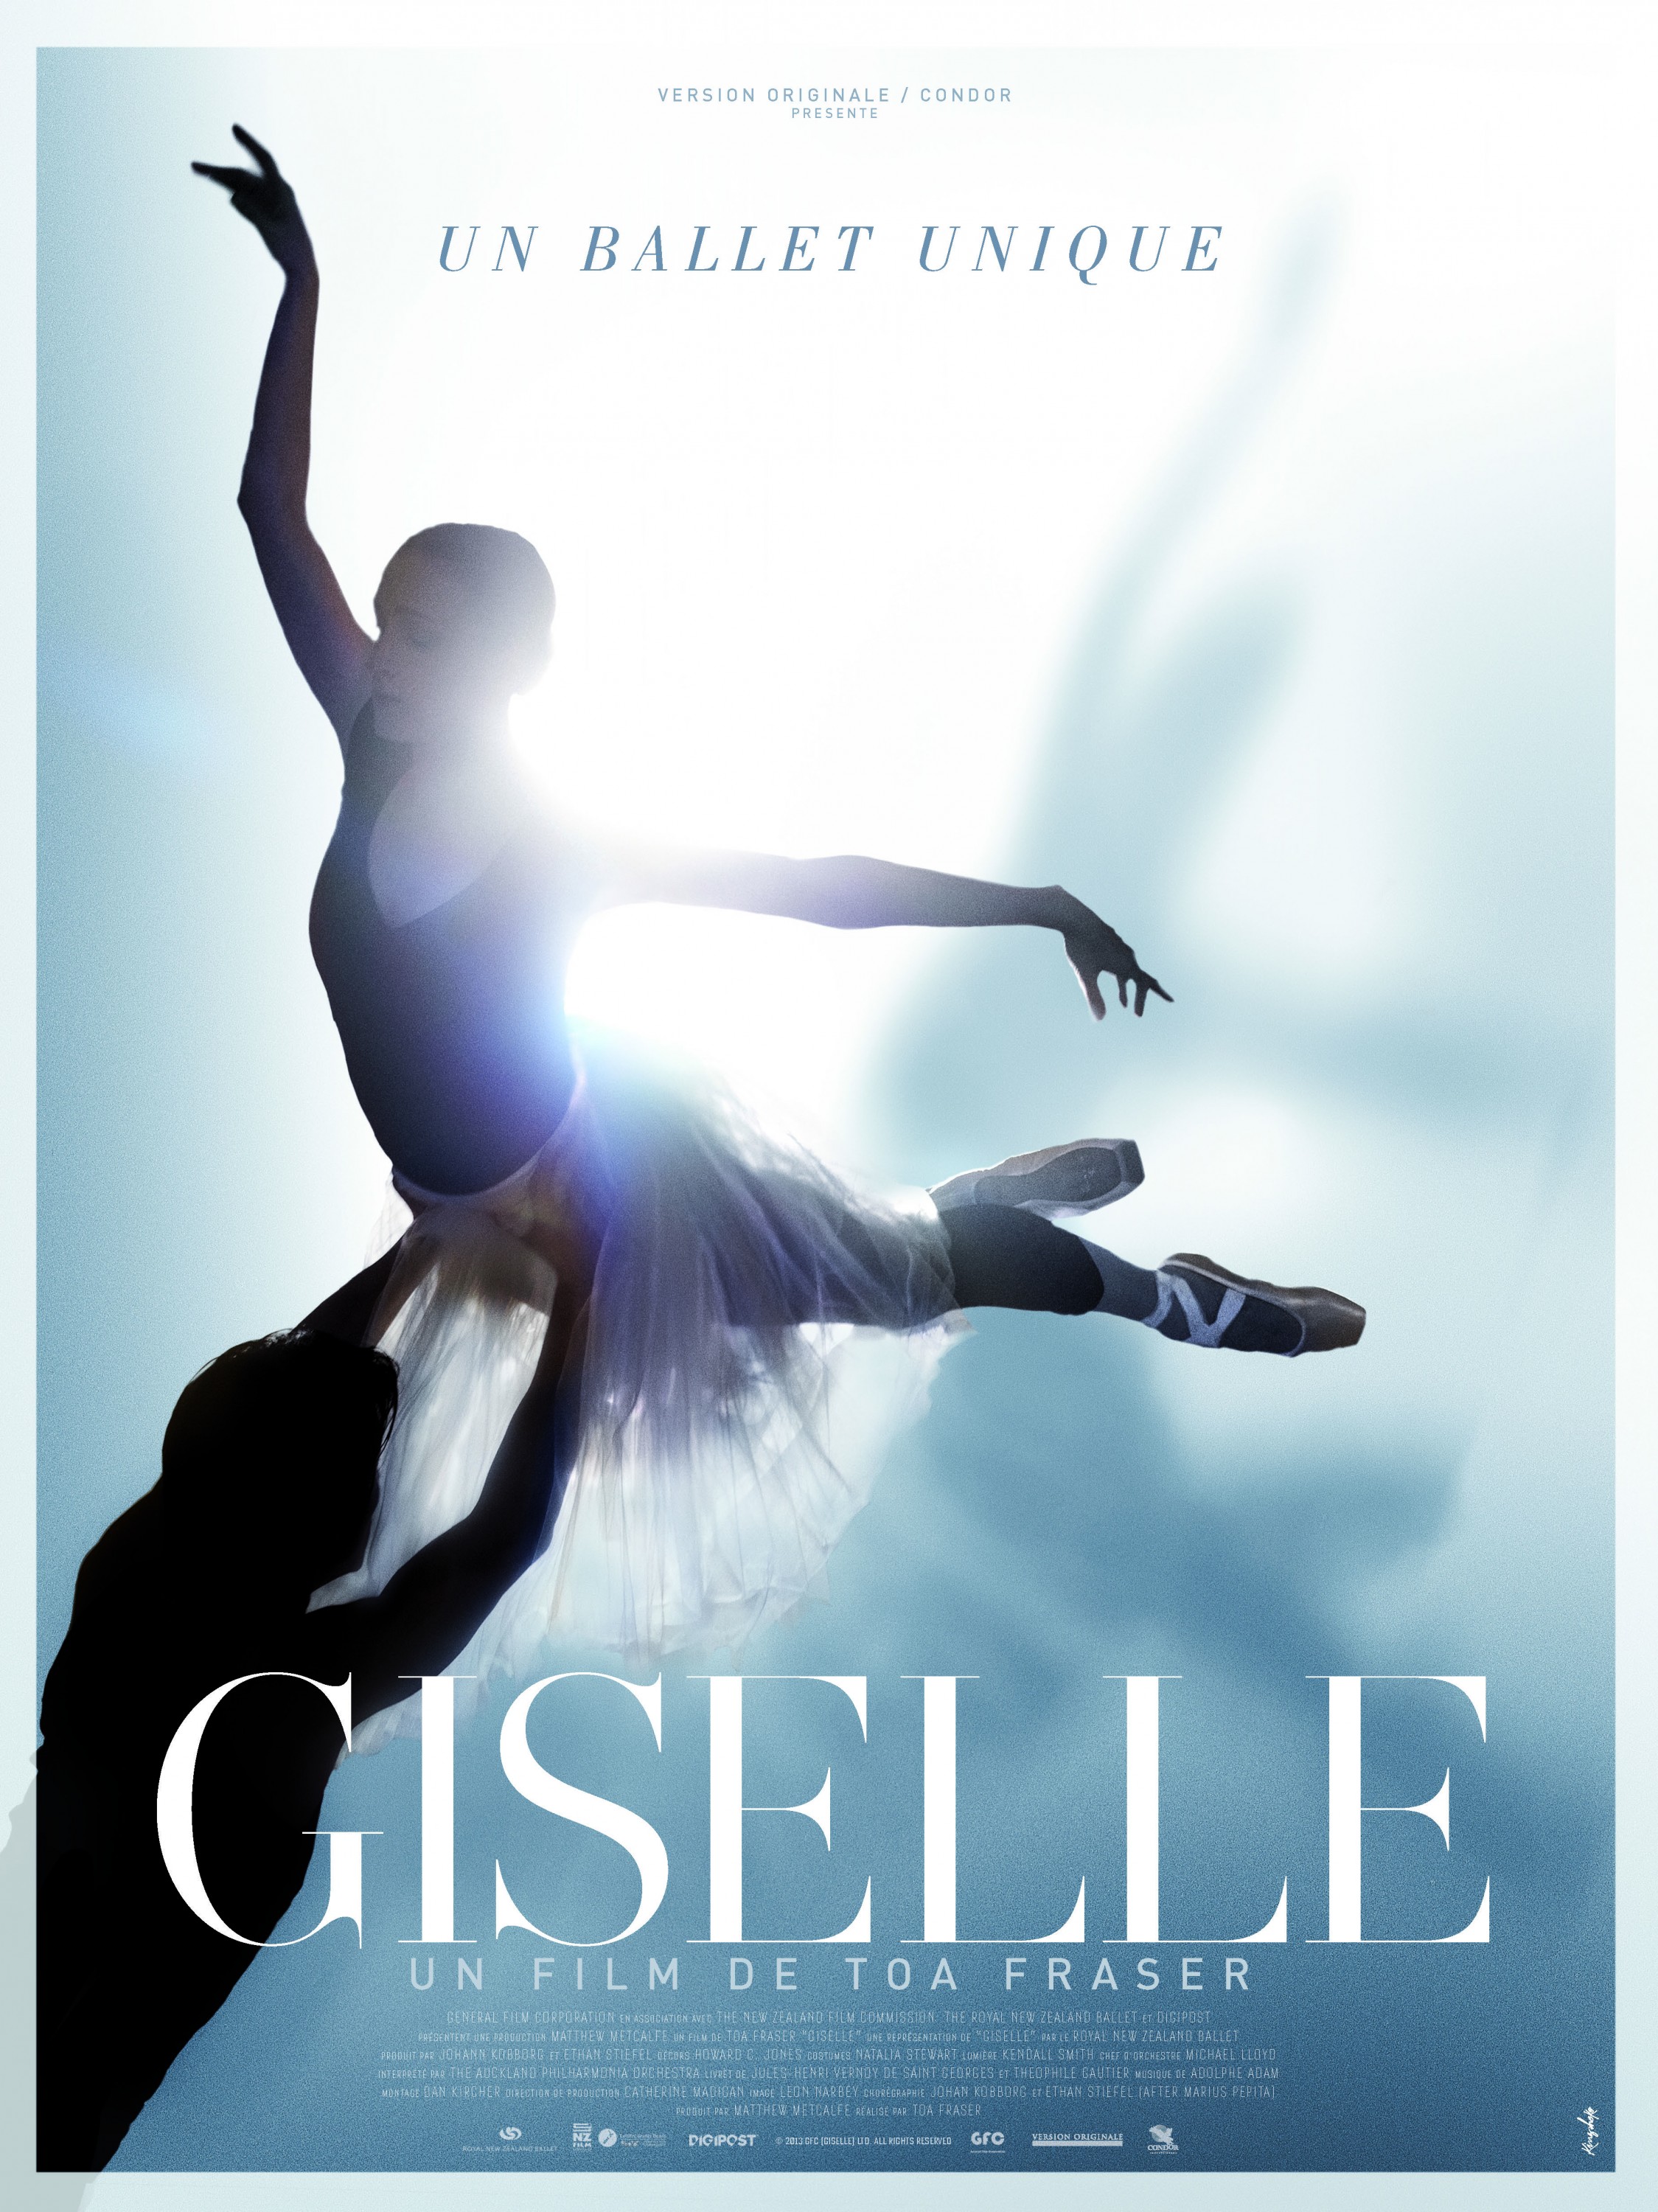 Mega Sized Movie Poster Image for Giselle (#2 of 2)